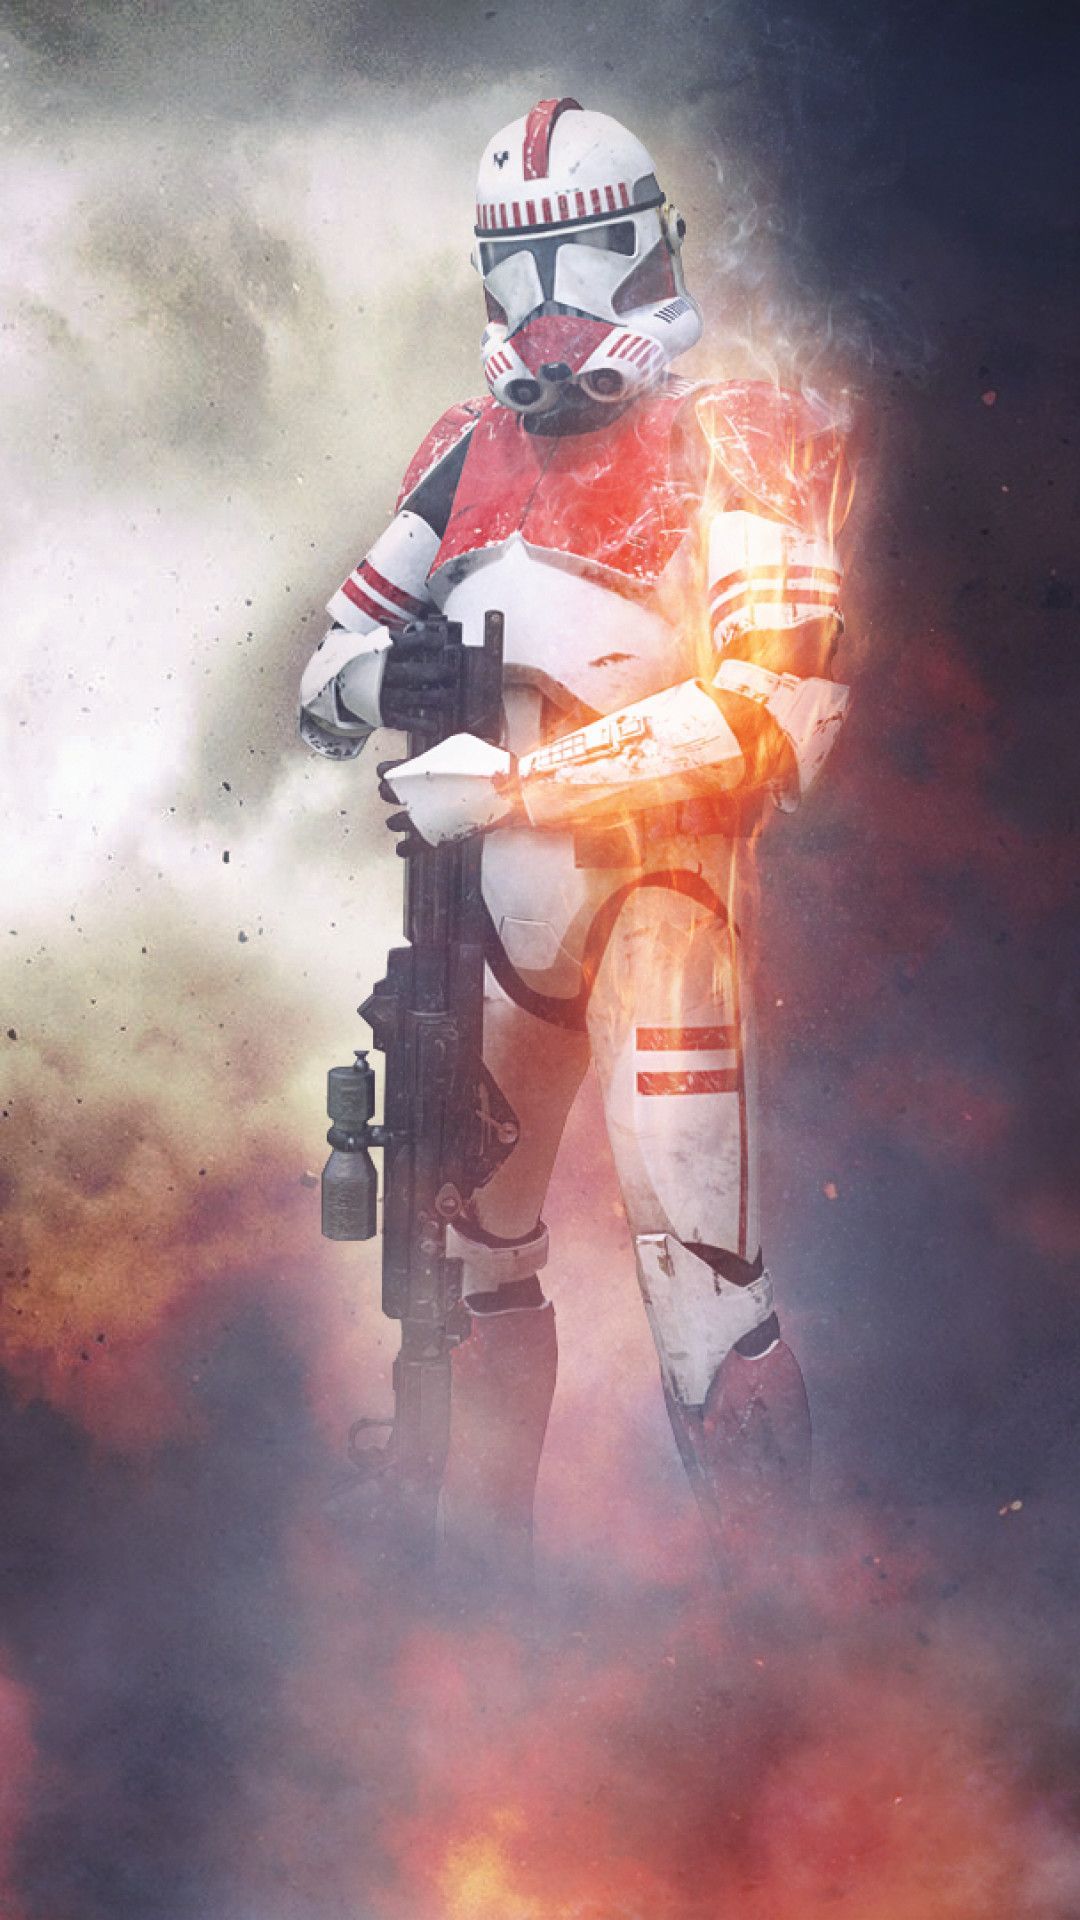 Clone Trooper iPhone Wallpaper. Star wars wallpaper, Star wars clone wars, Star wars battlefront